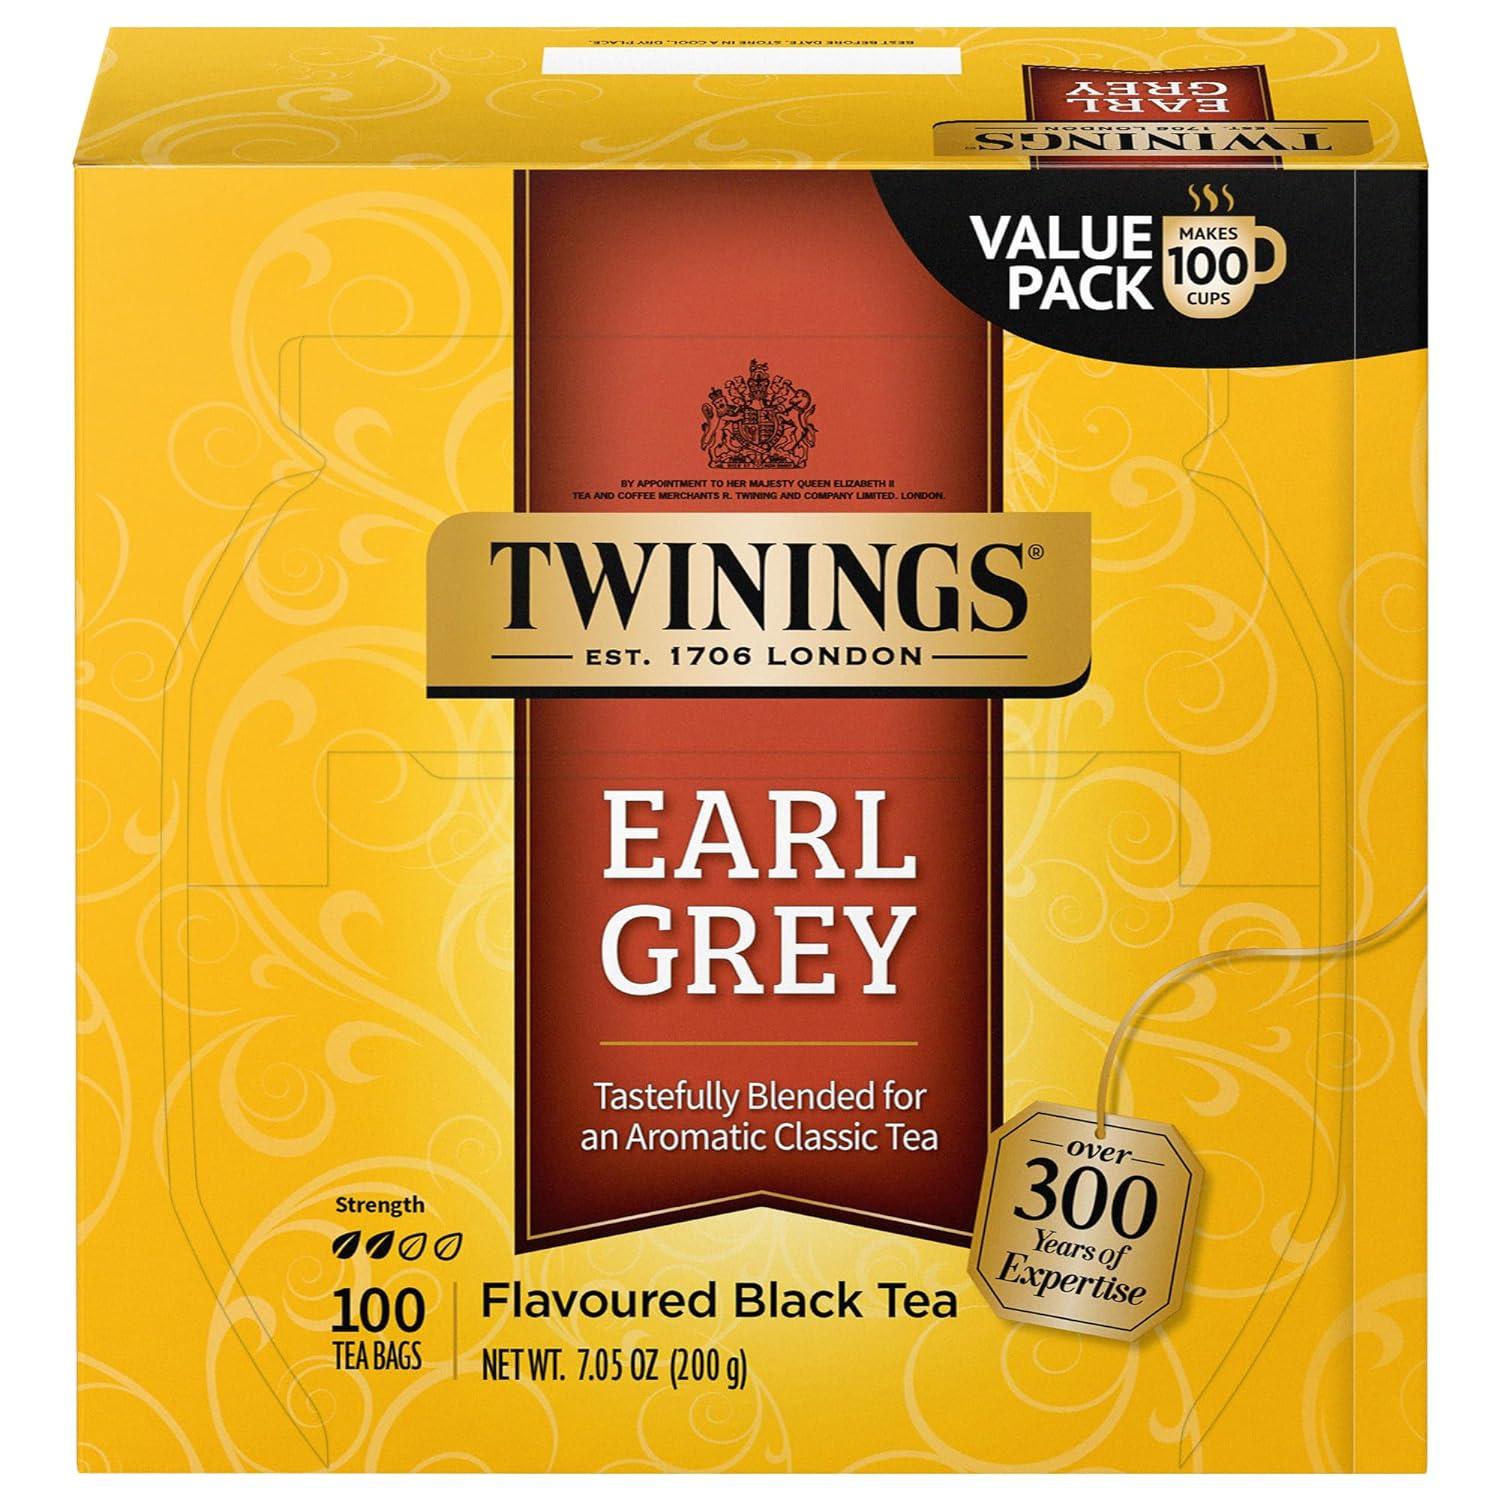 Twinings Earl Grey Black Tea 100 Bags for $9.48